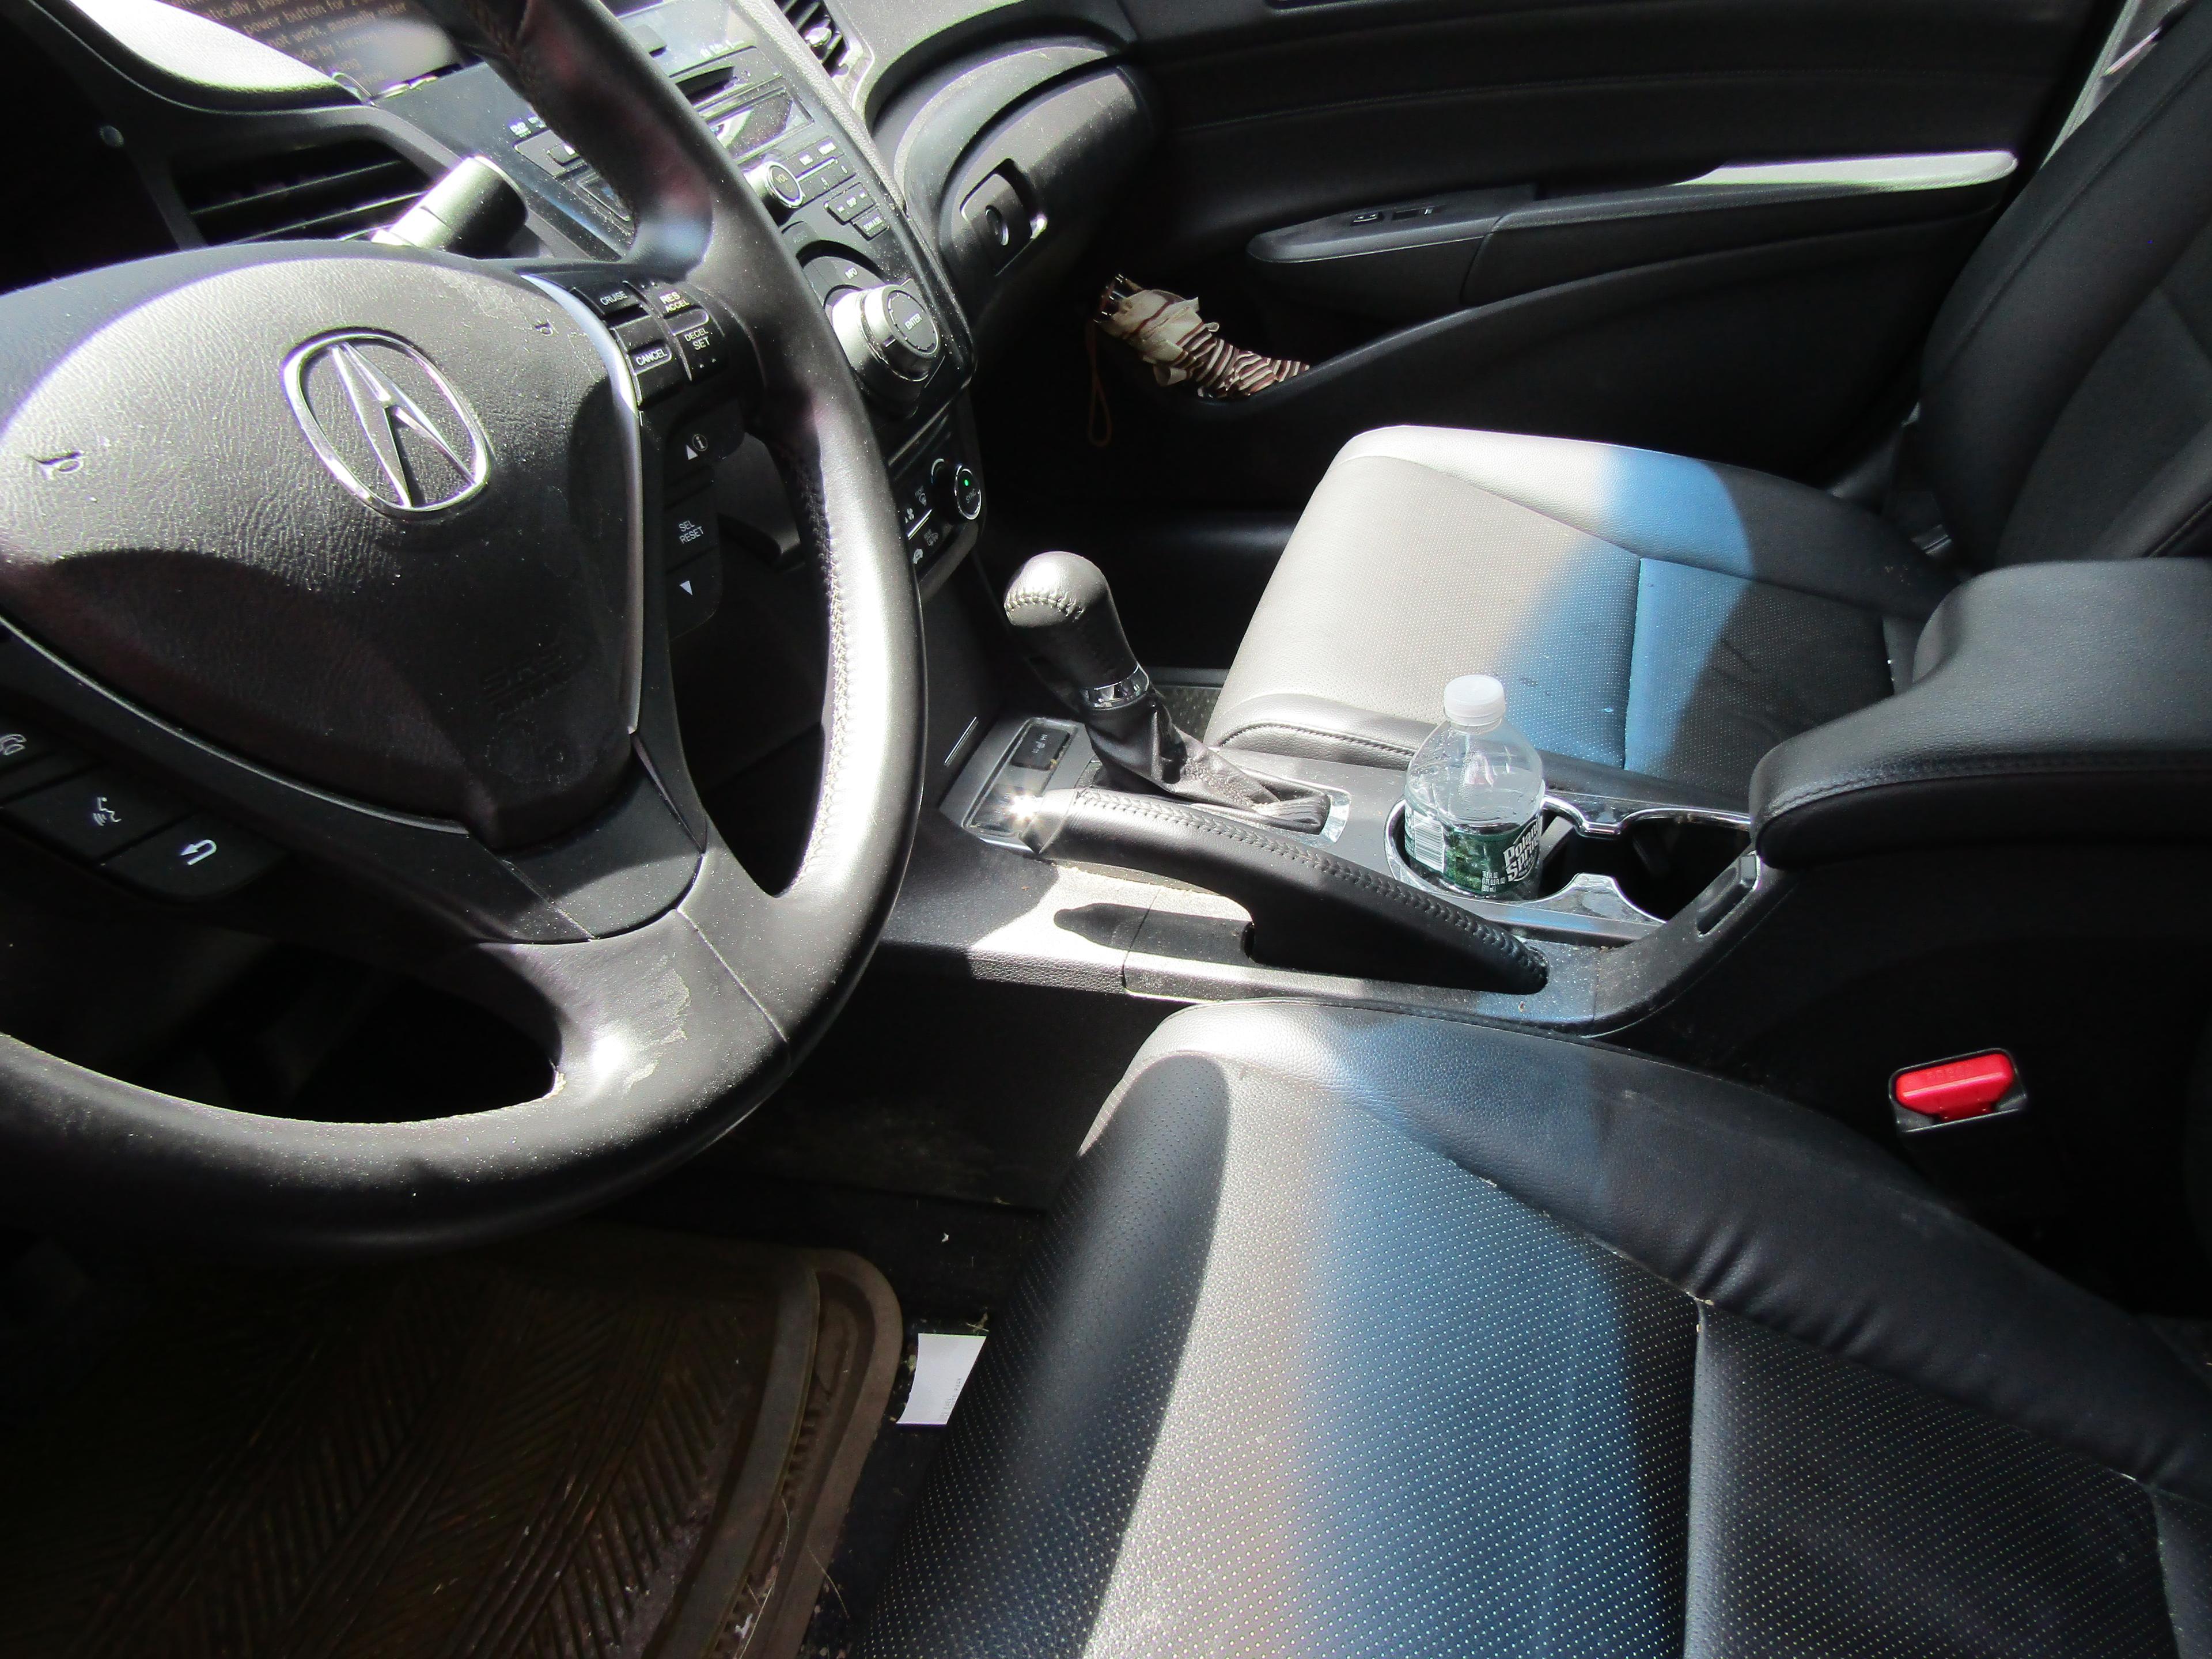 2014 Acura ILX, 4 Door, 90983 Miles, Starts Good, A/C Working, Good Tires, Loaded, Good Interior